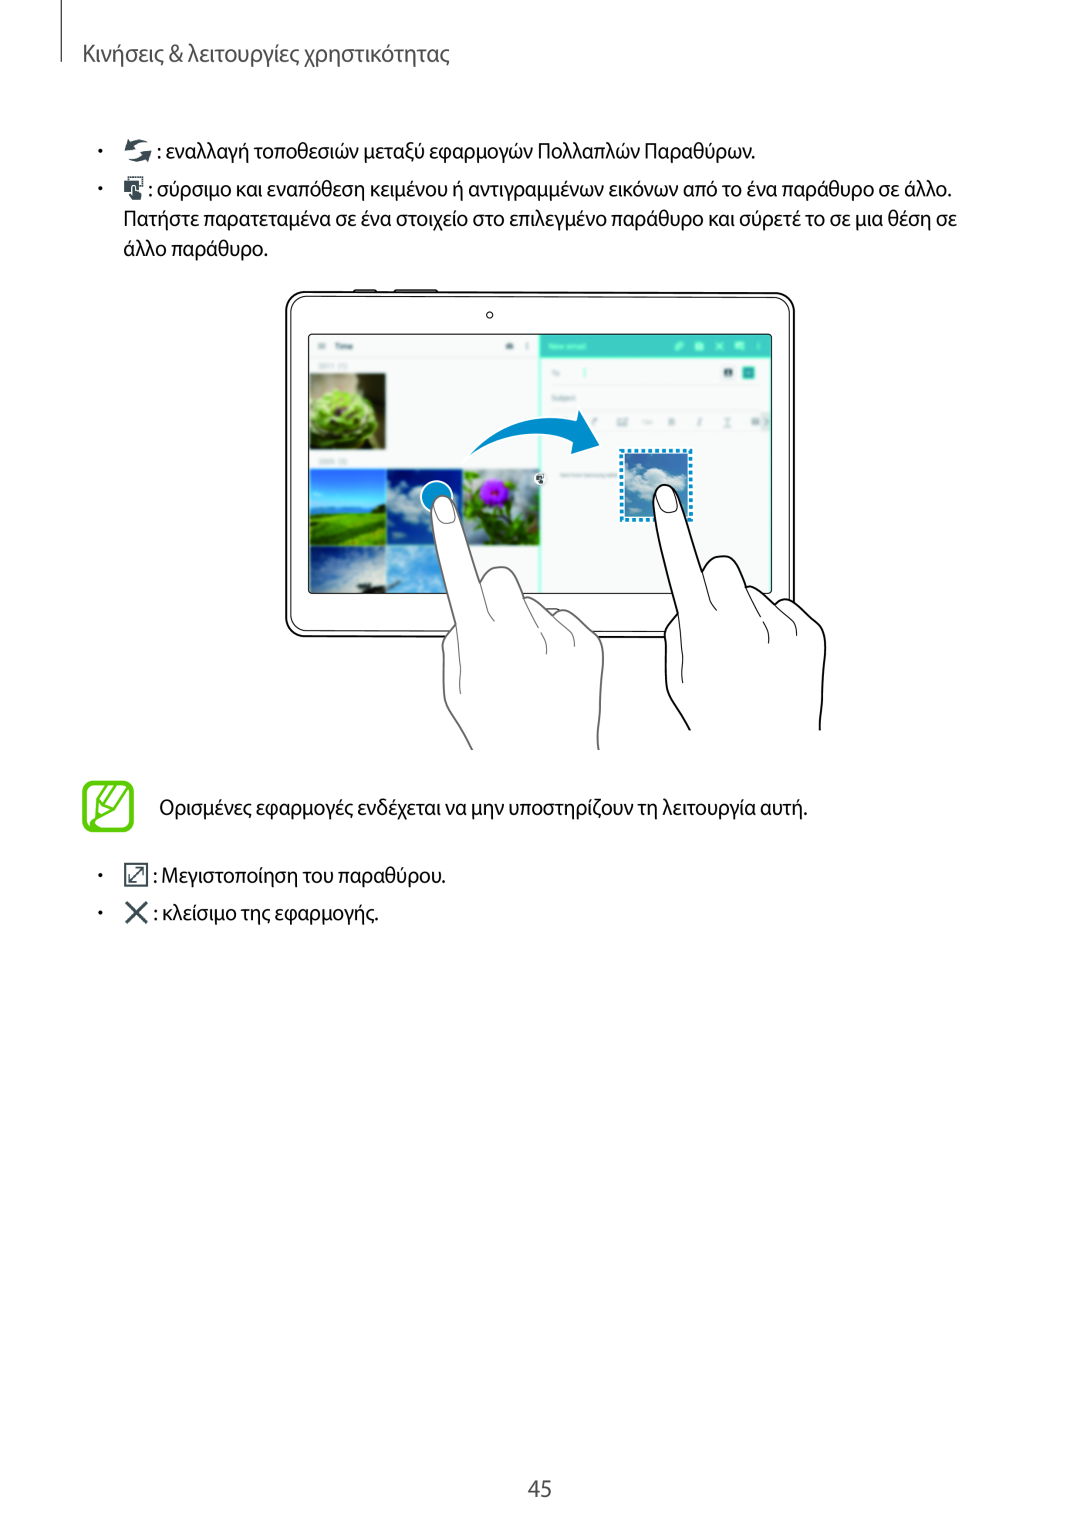 Samsung SM-T805NZWAEUR Κινήσεις & λειτουργίες χρηστικότητας, εναλλαγή τοποθεσιών μεταξύ εφαρμογών Πολλαπλών Παραθύρων 